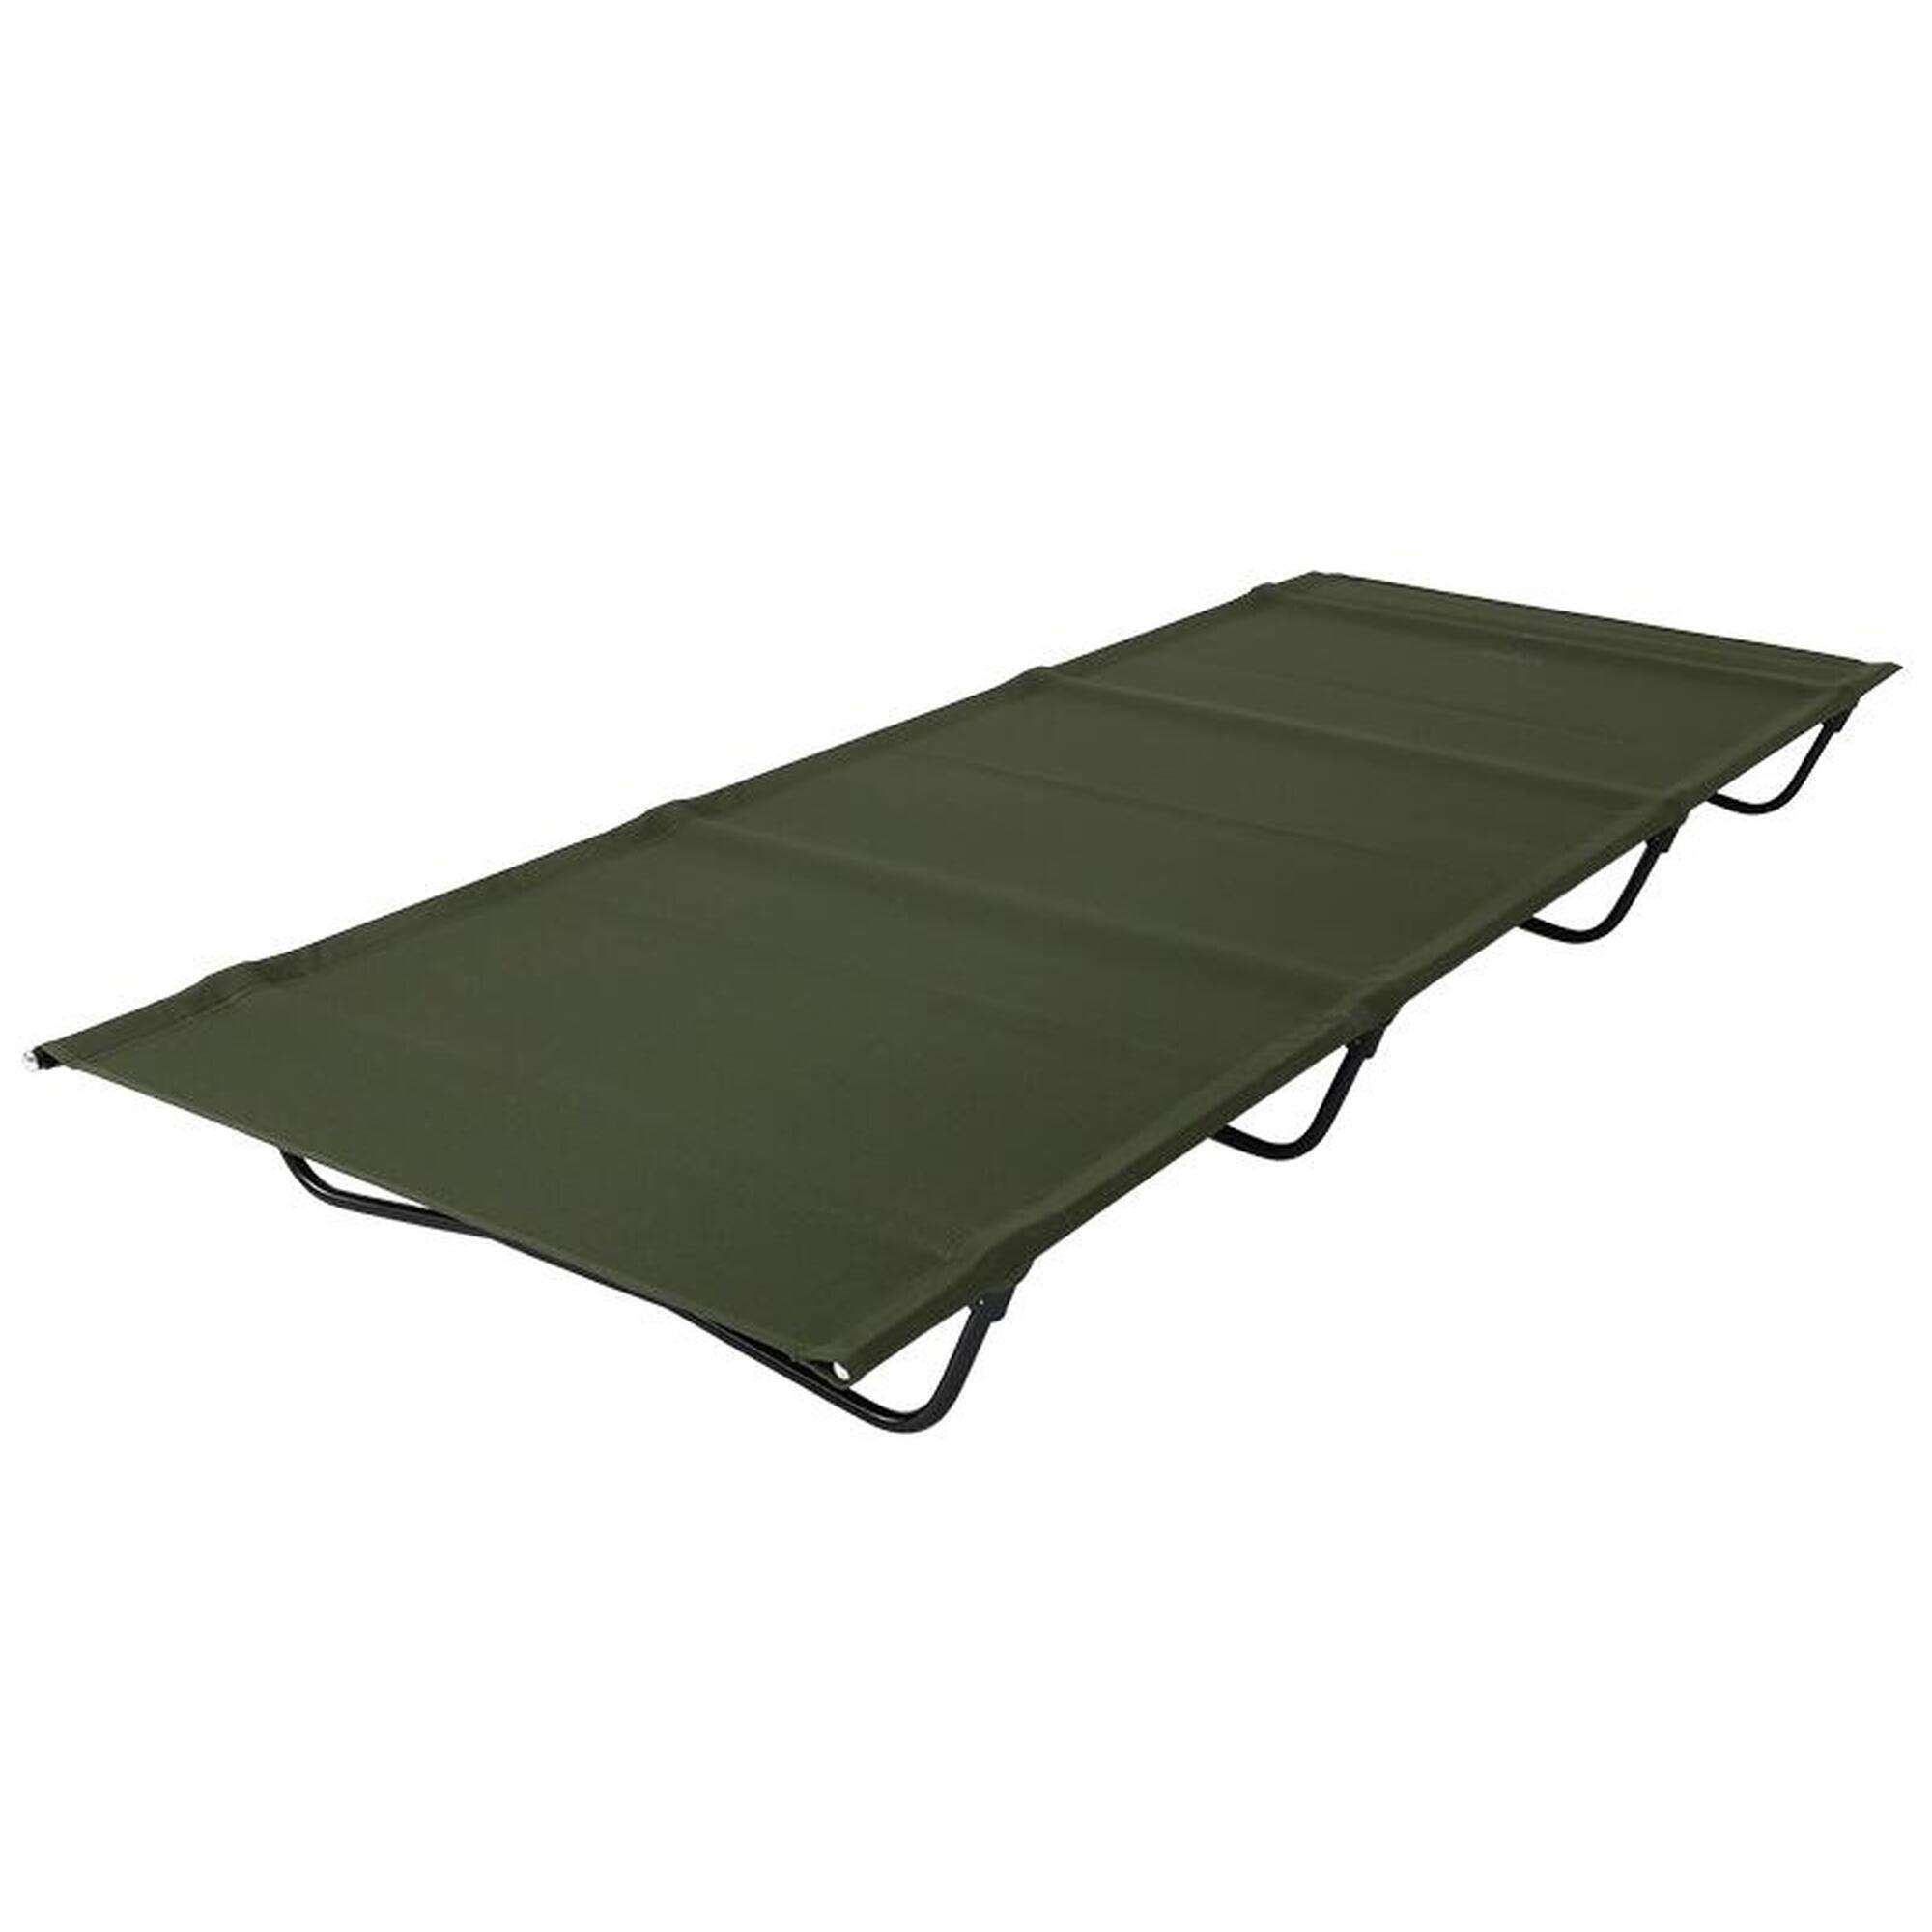 CB1-510-KH Bag-in Bed Camping Cot - Khaki